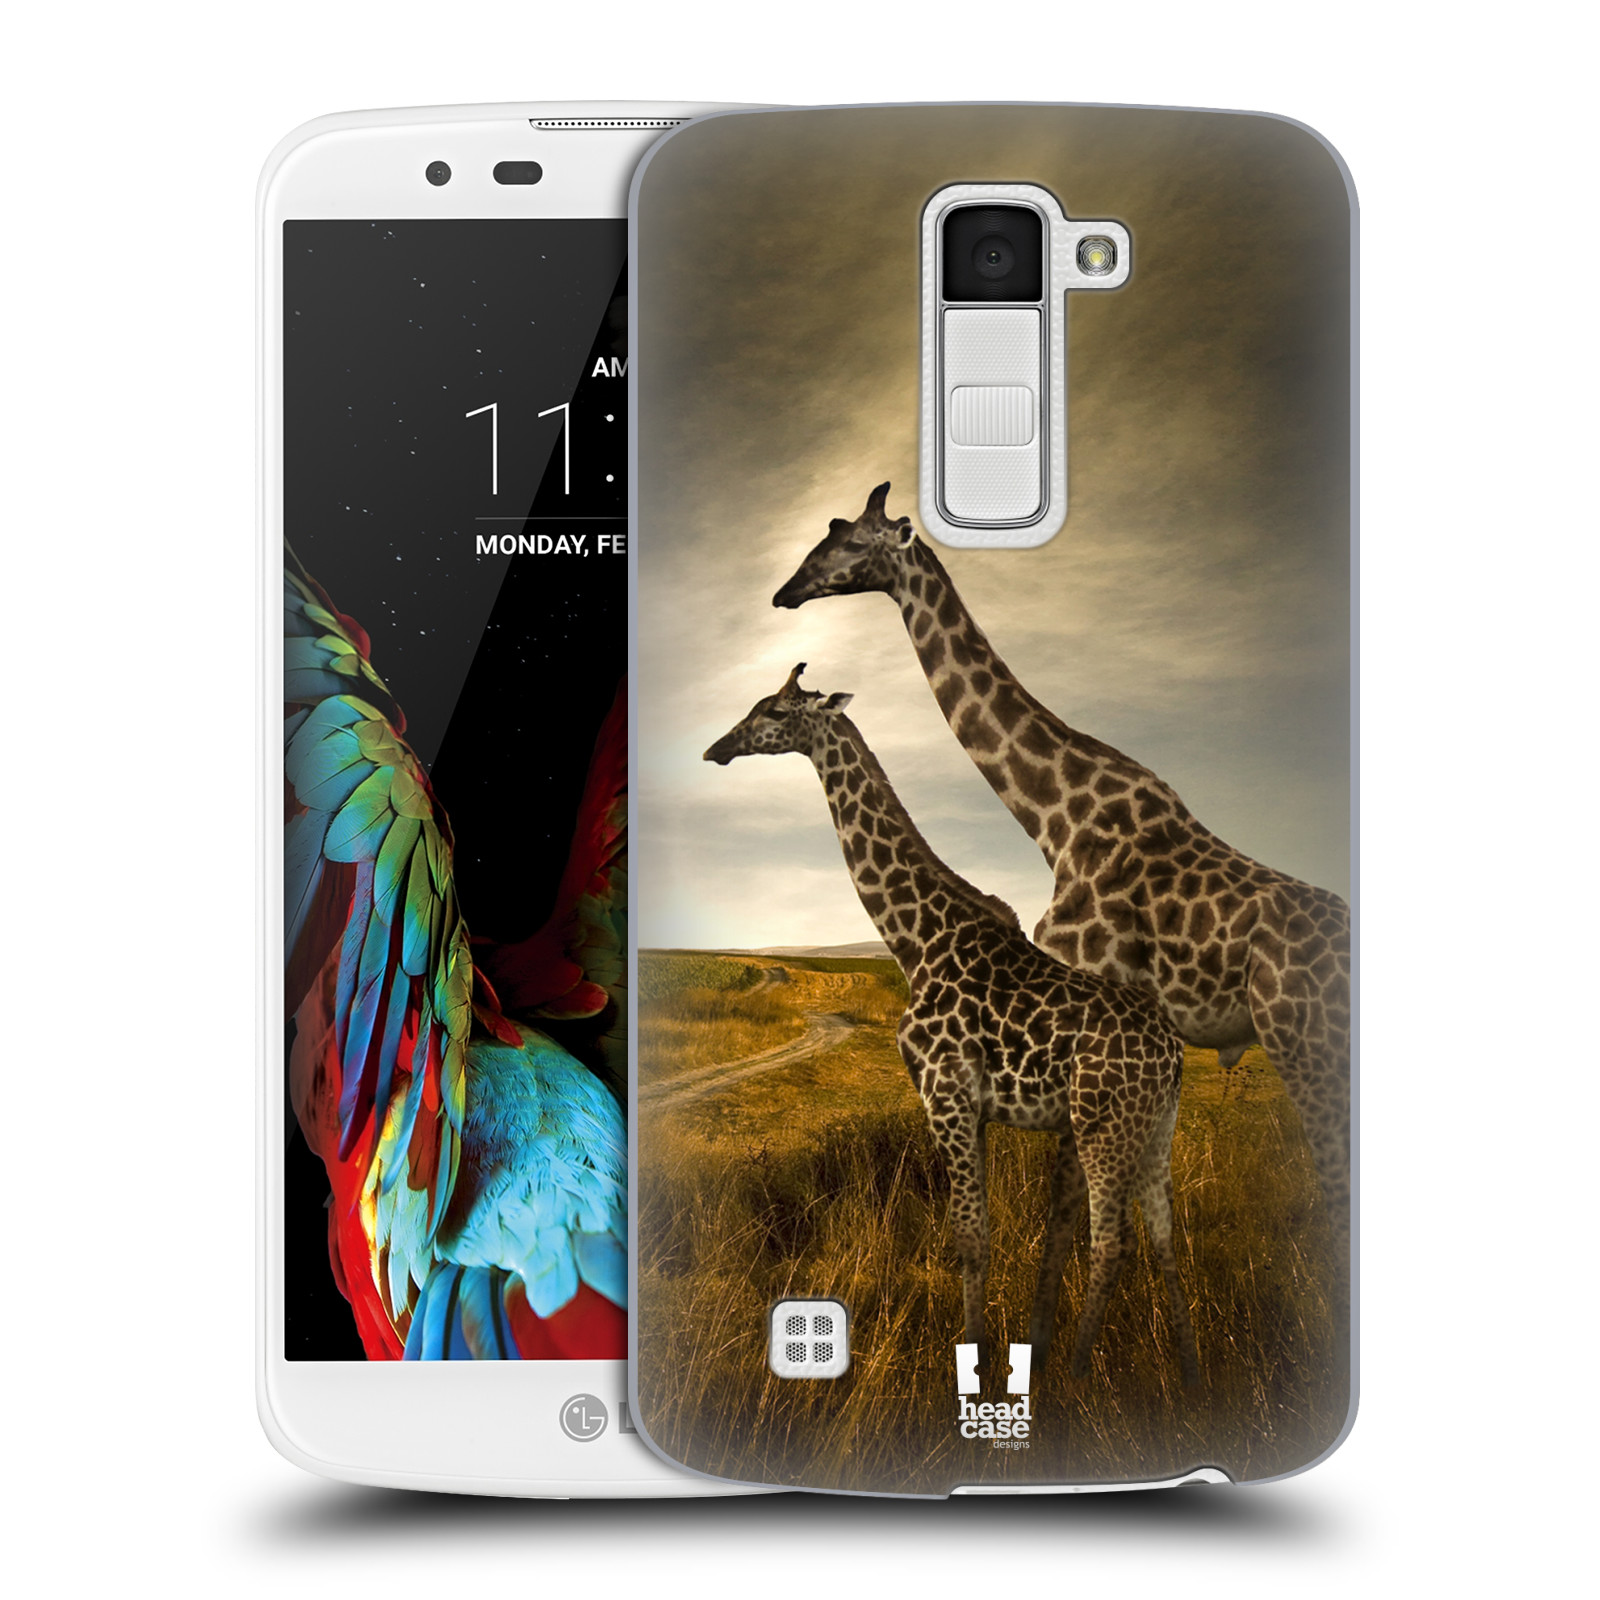 HEAD CASE plastový obal na mobil LG K10 vzor Divočina, Divoký život a zvířata foto AFRIKA ŽIRAFY VÝHLED